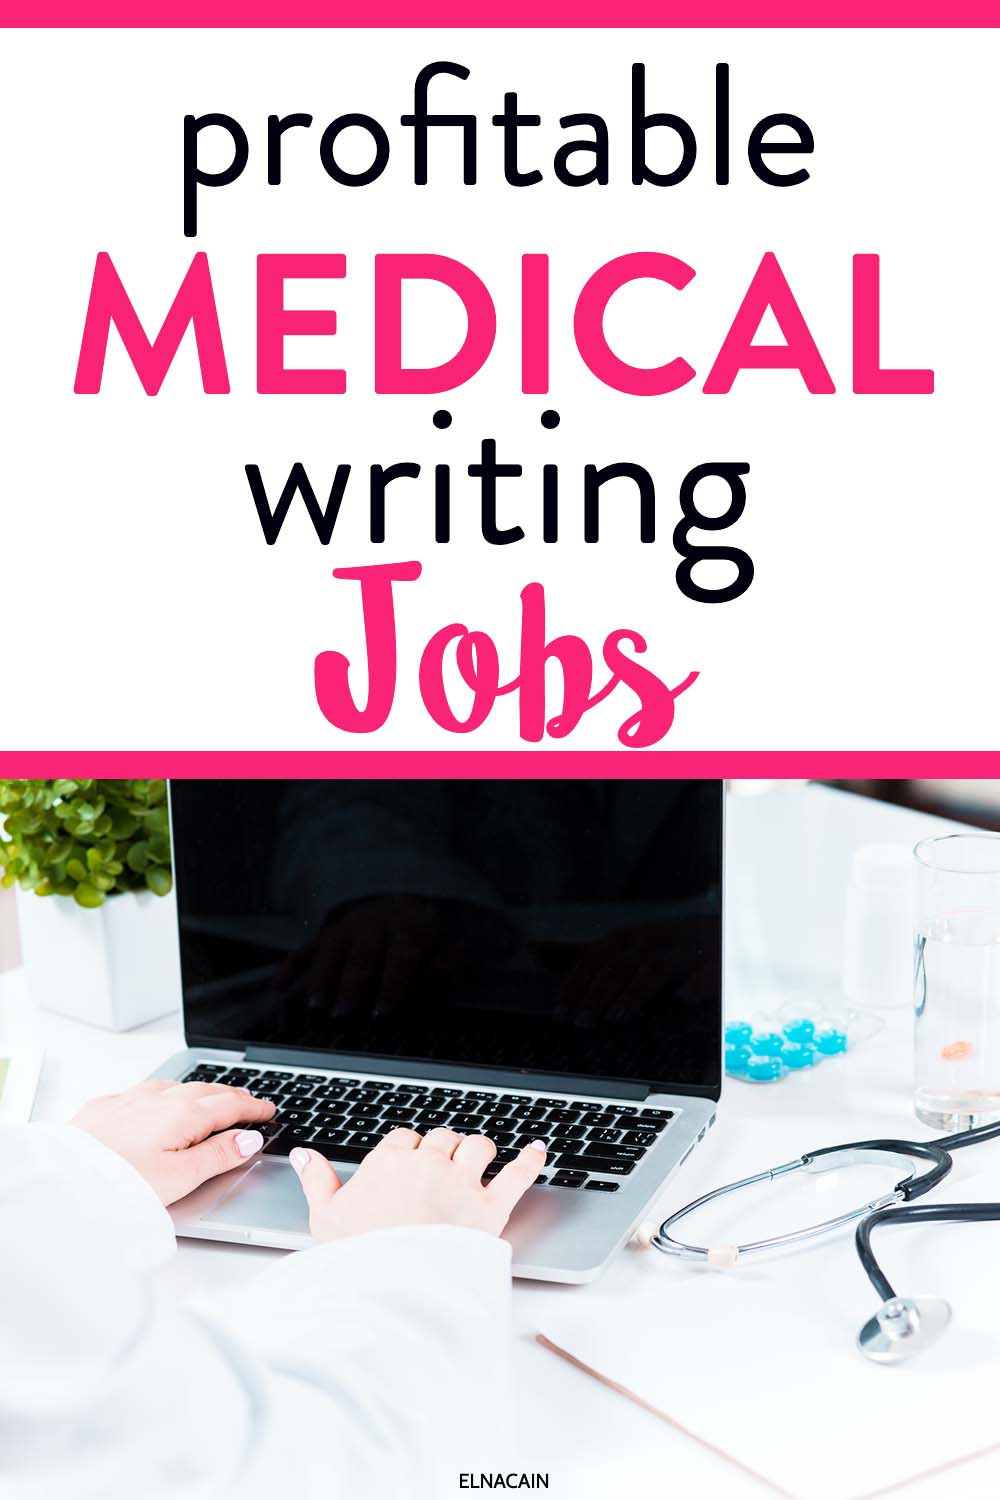 writing medical articles jobs